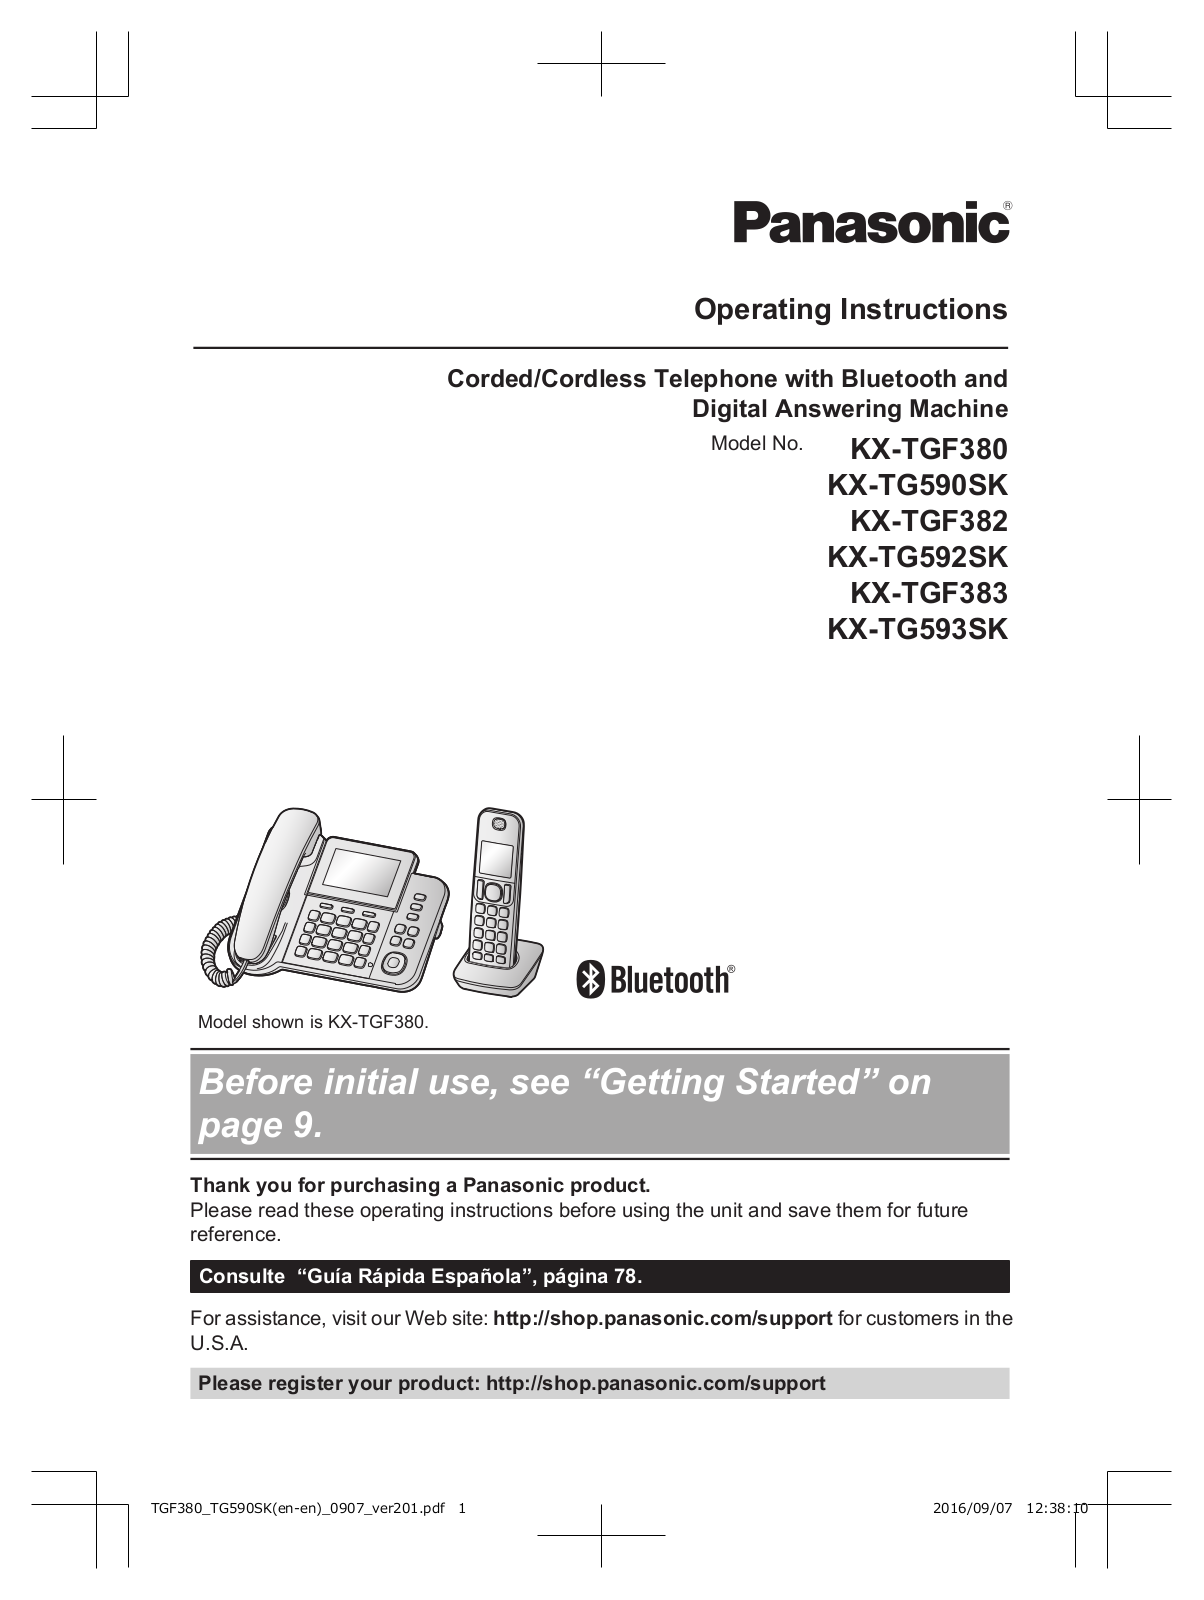 Panasonic KX-TG590SK, KX-TG593SK, KX-TG592SK Operating Instructions